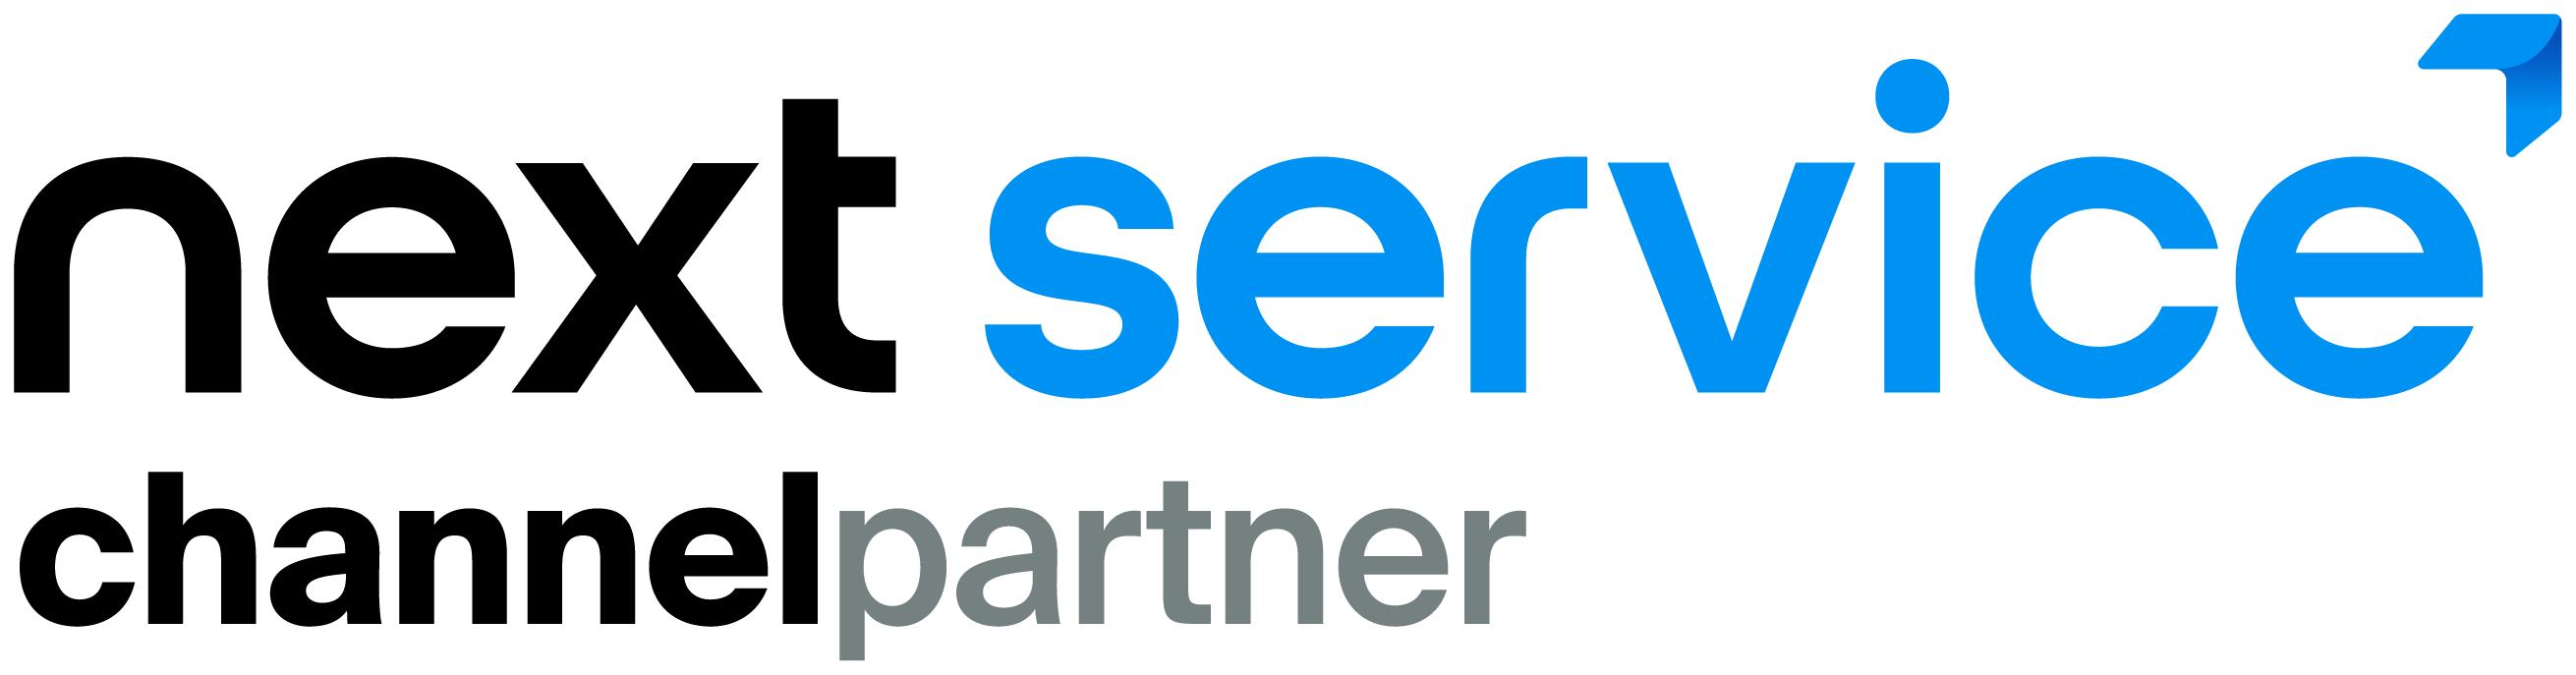 Next Service Logo Channel Partner Positive